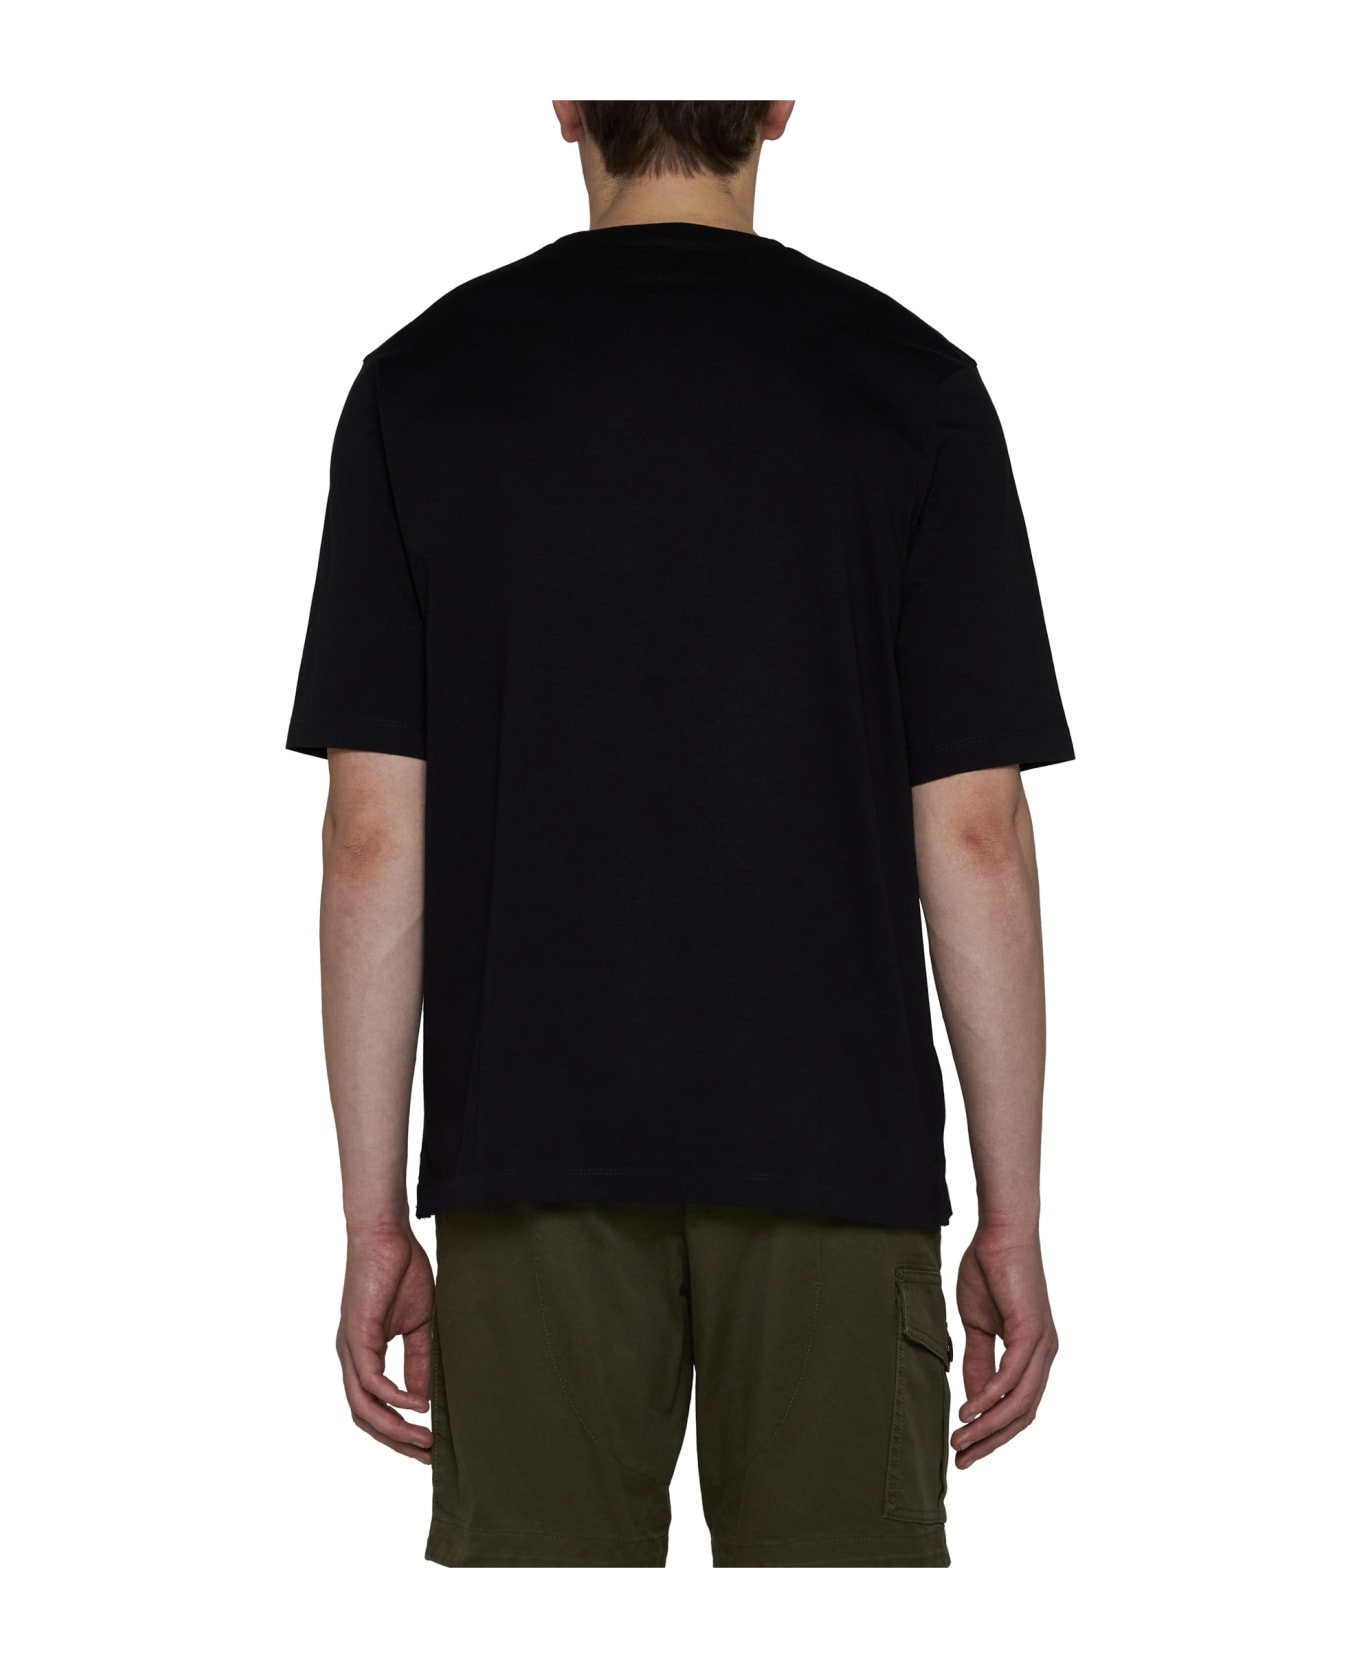 Dsquared2 Crewneck T-shirt With Canadian Village Print - Black シャツ